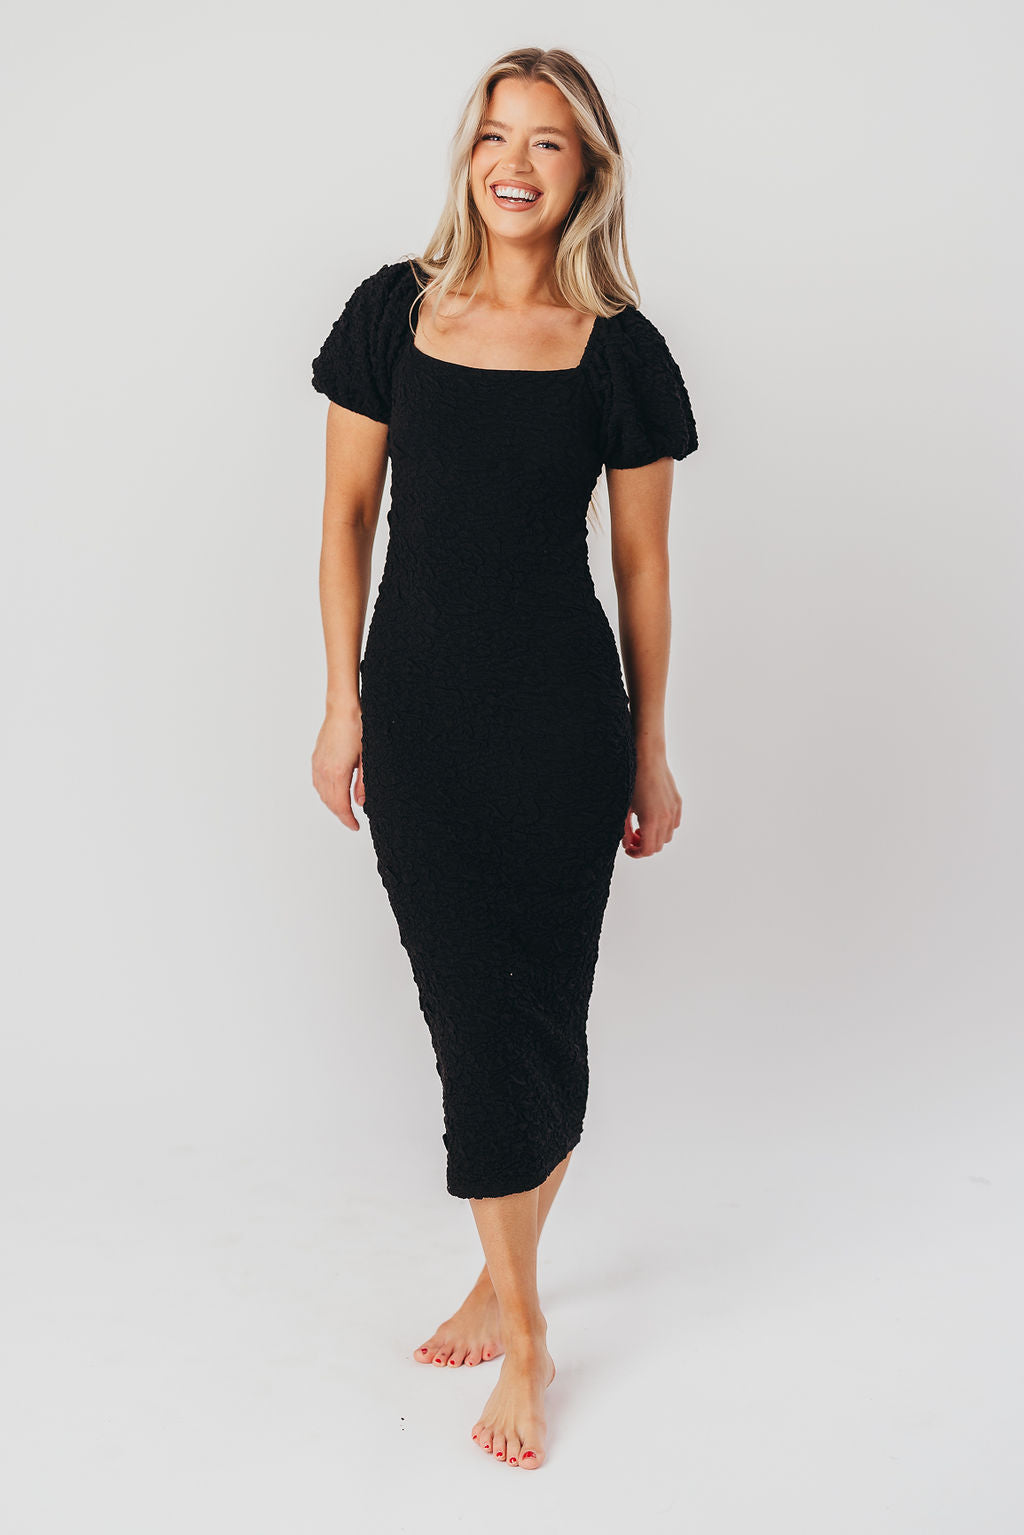 Blakeley Textured Midi Dress in Black - Bump Friendly & Inclusive Sizing (S-3XL)